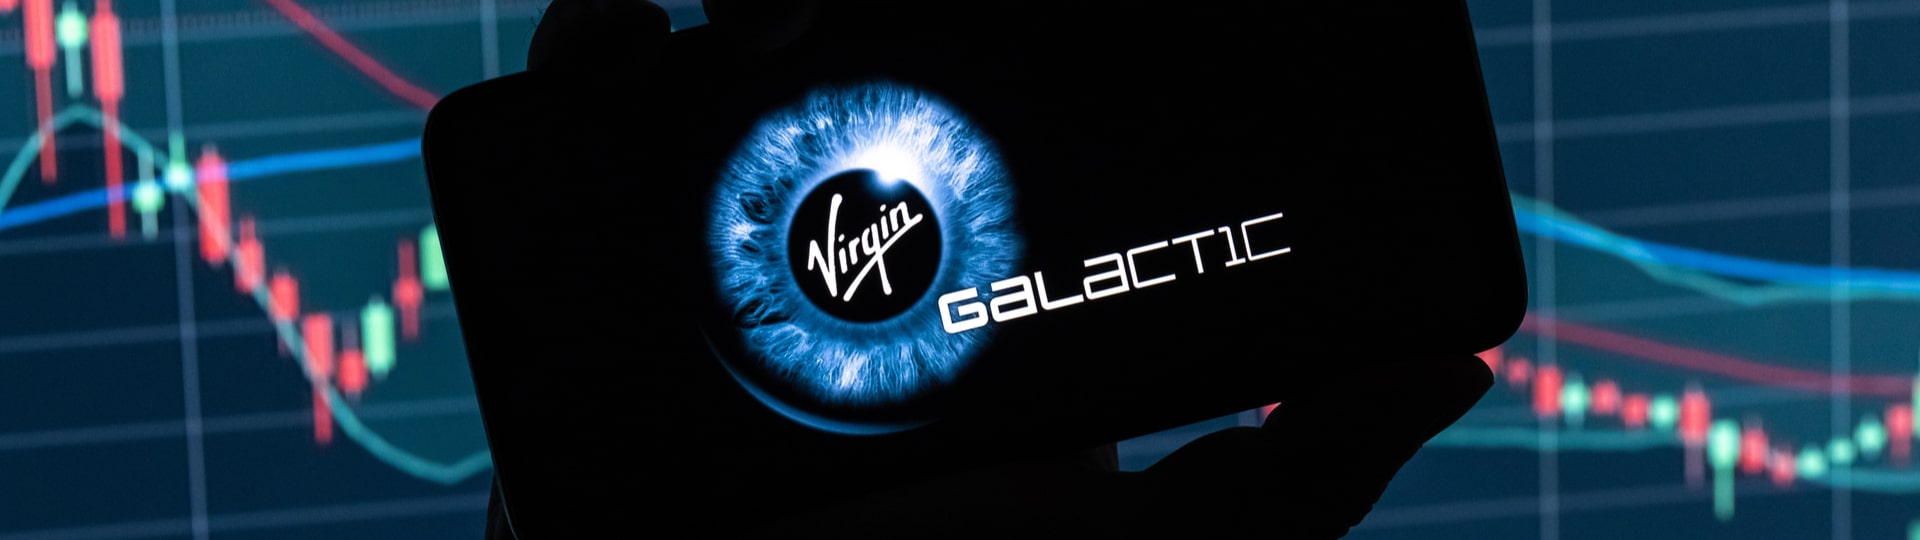 Richard Branson prodal akcie ve Virgin Galactic za 300 milionů dolarů